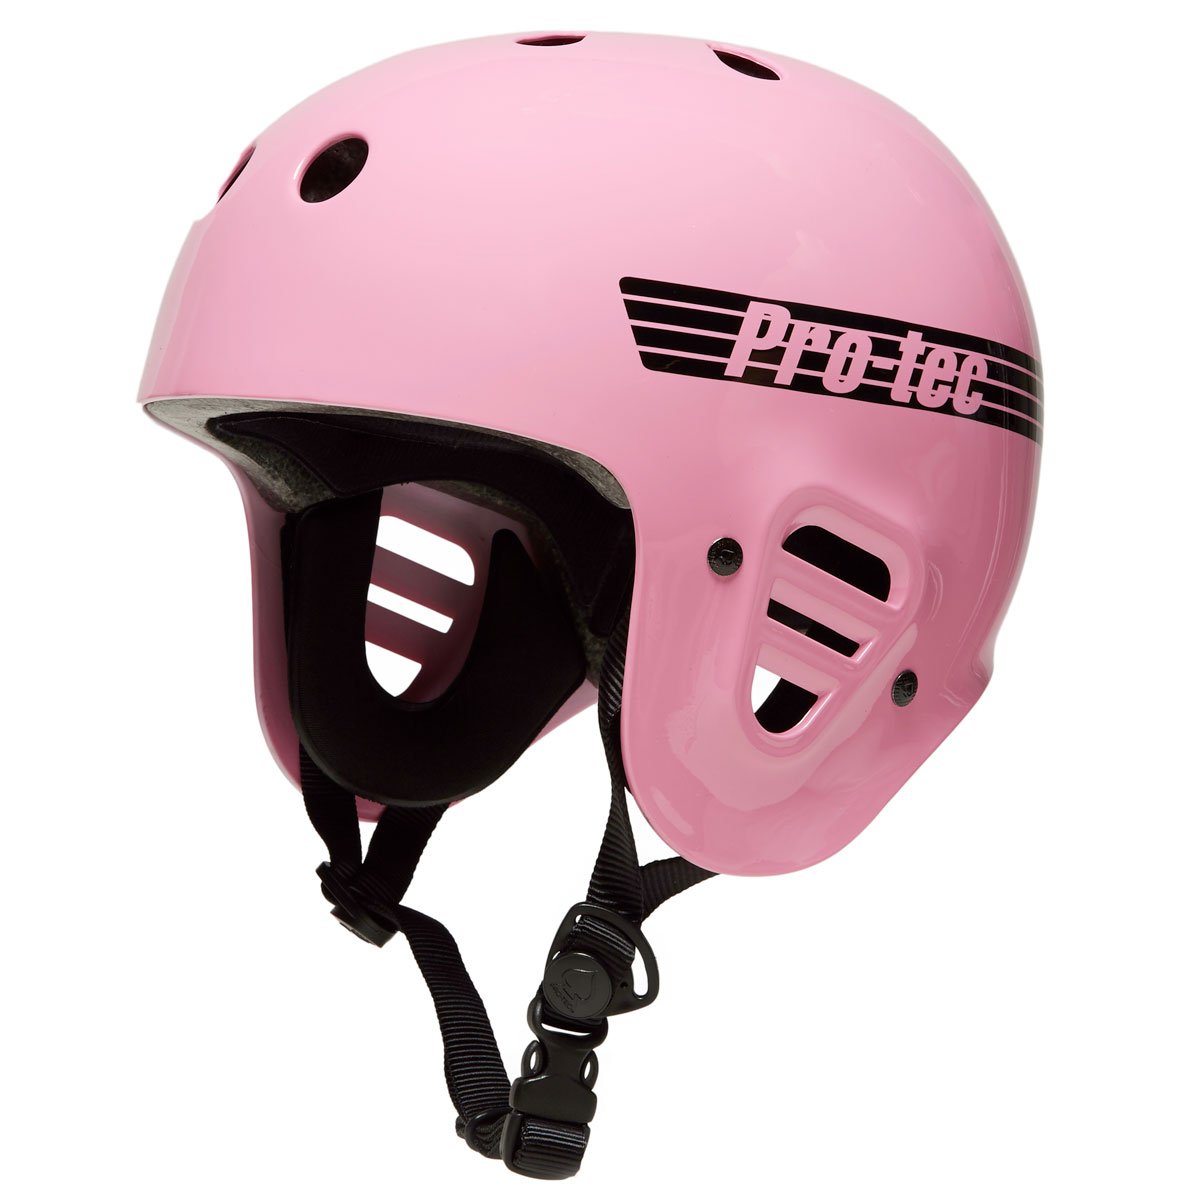 Pro-Tec Full Cut Certified Helmet - Gloss Pink image 1